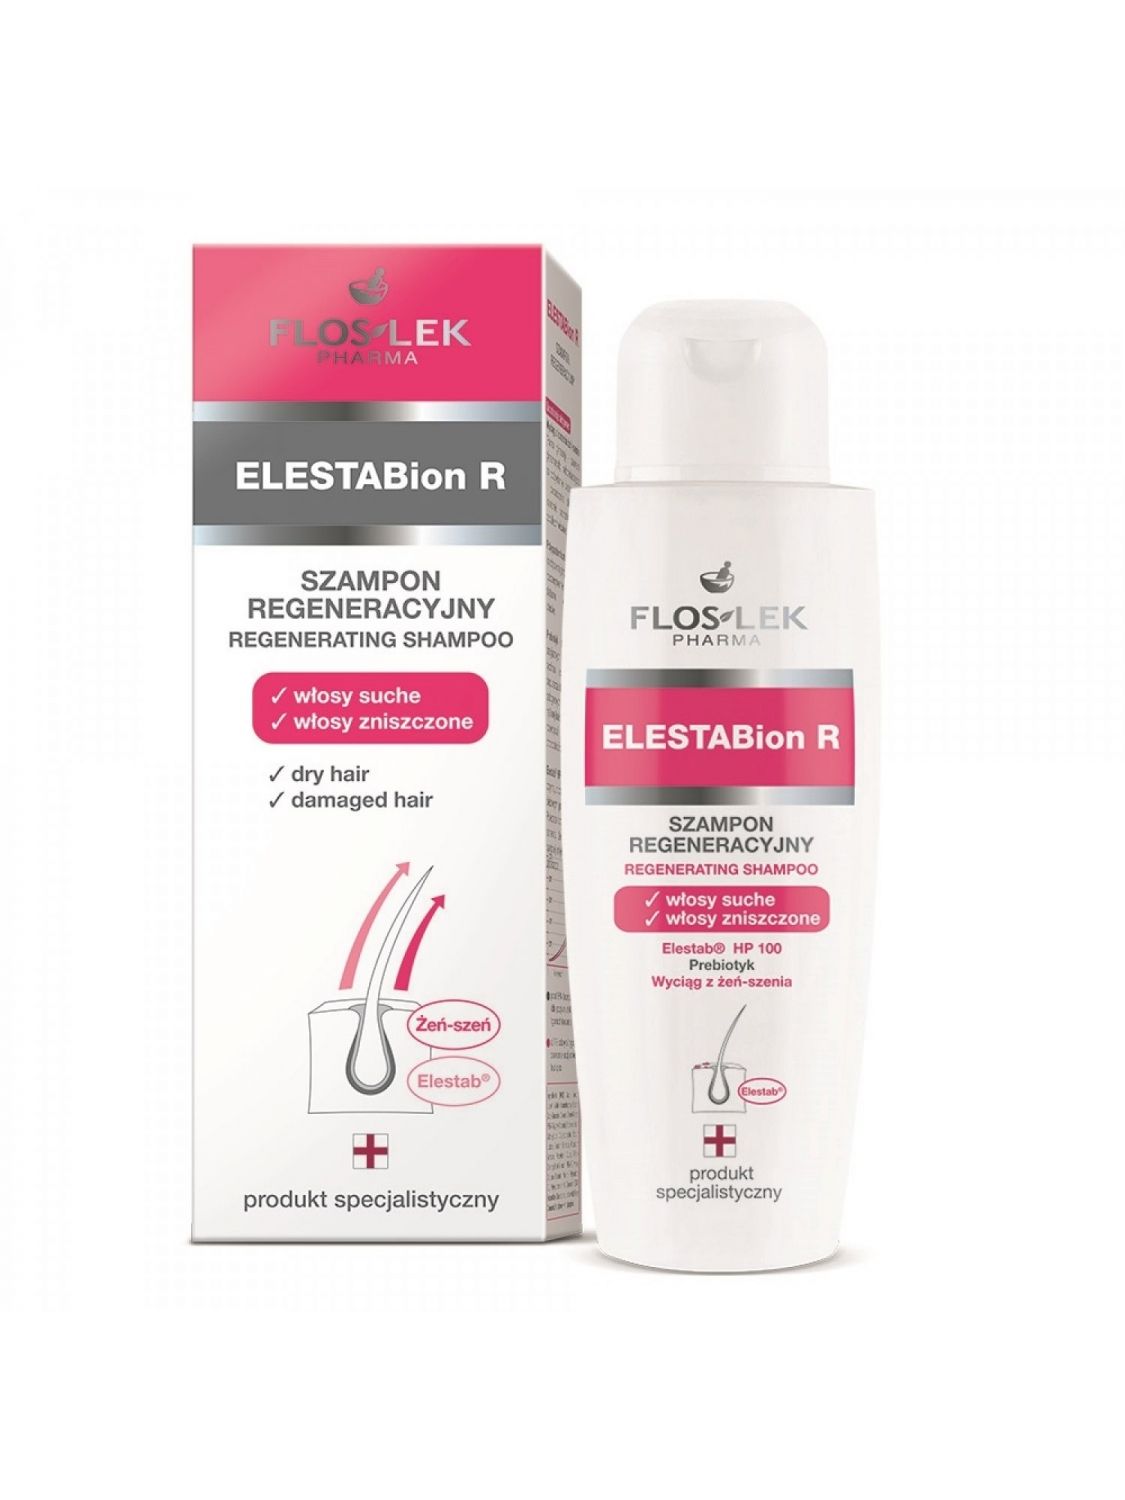 Floslek ELESTABion R - Regenerative shampoo - dry and damaged hair